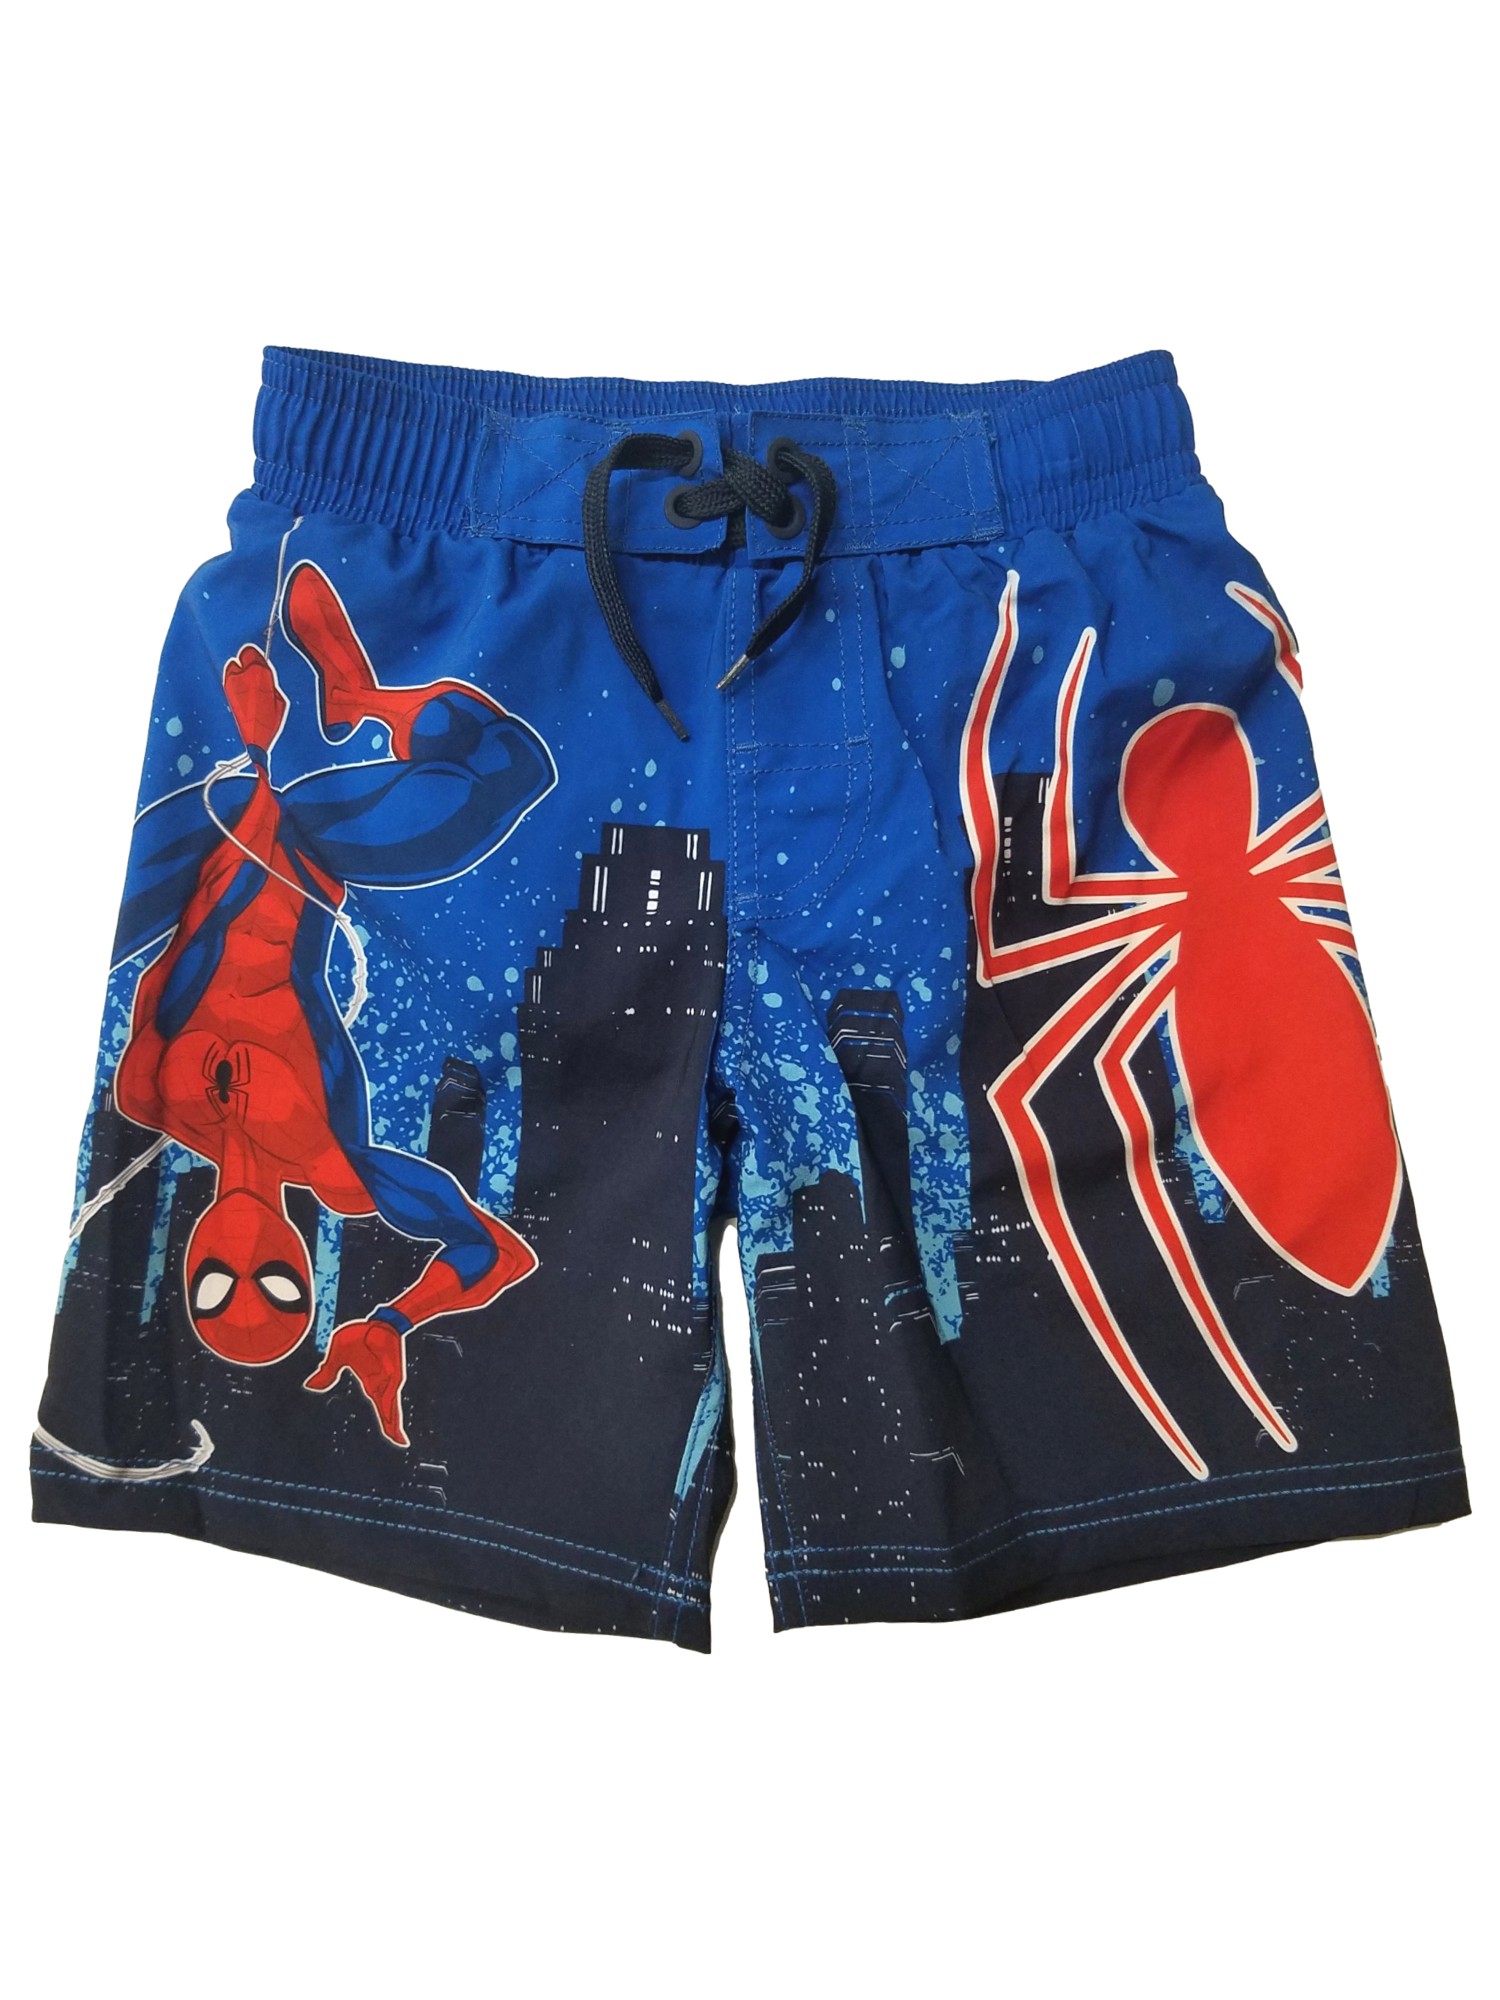 Marvel Boys Spiderman Board Shorts Swim Trunks X-Small (4-5)